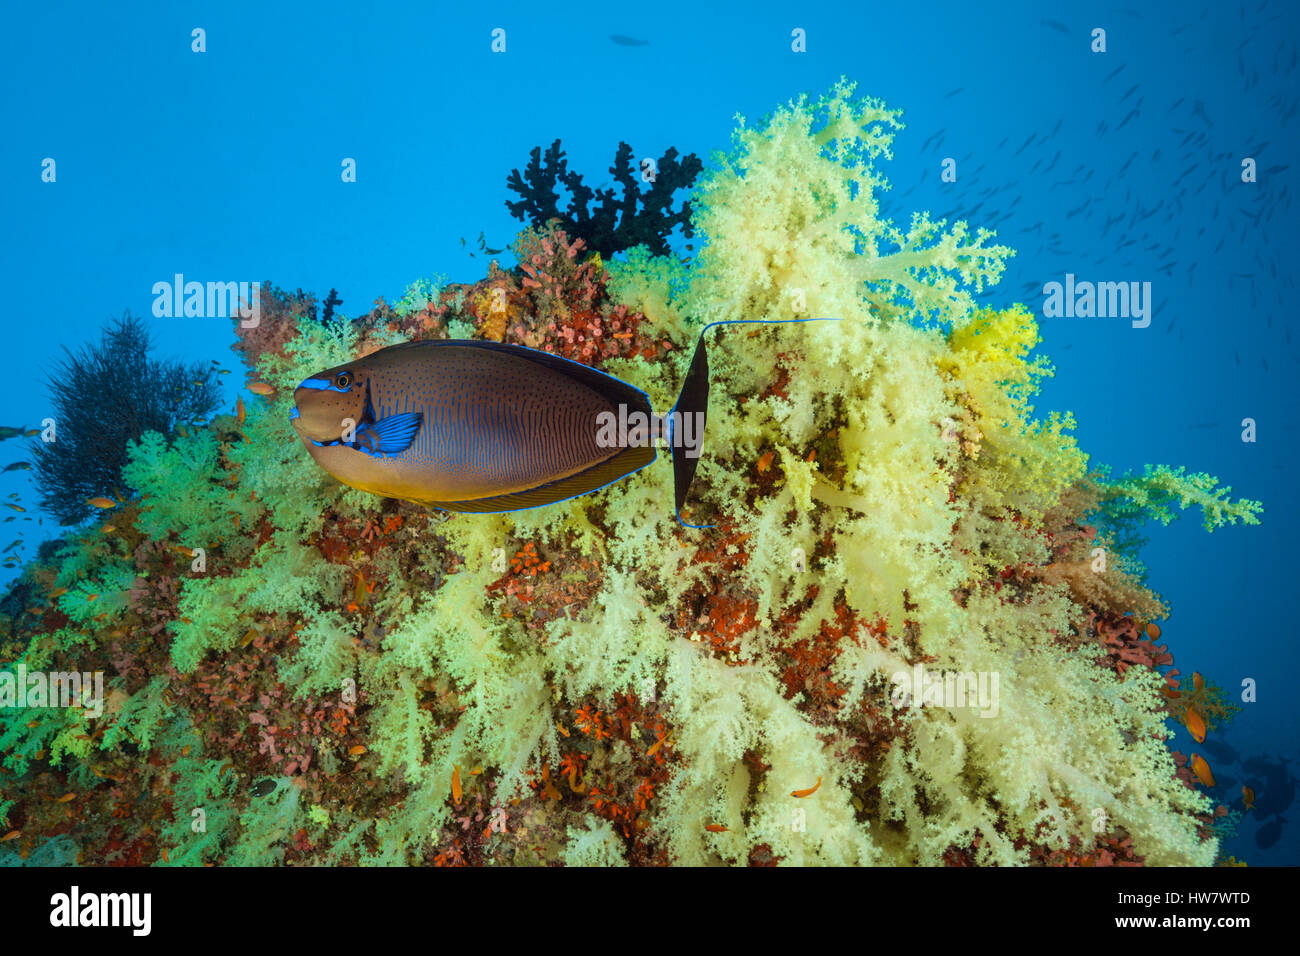 Bignose Unicornfish at Coral Reef, Naso vlamingii, Felidhu Atoll, Maldives Stock Photo